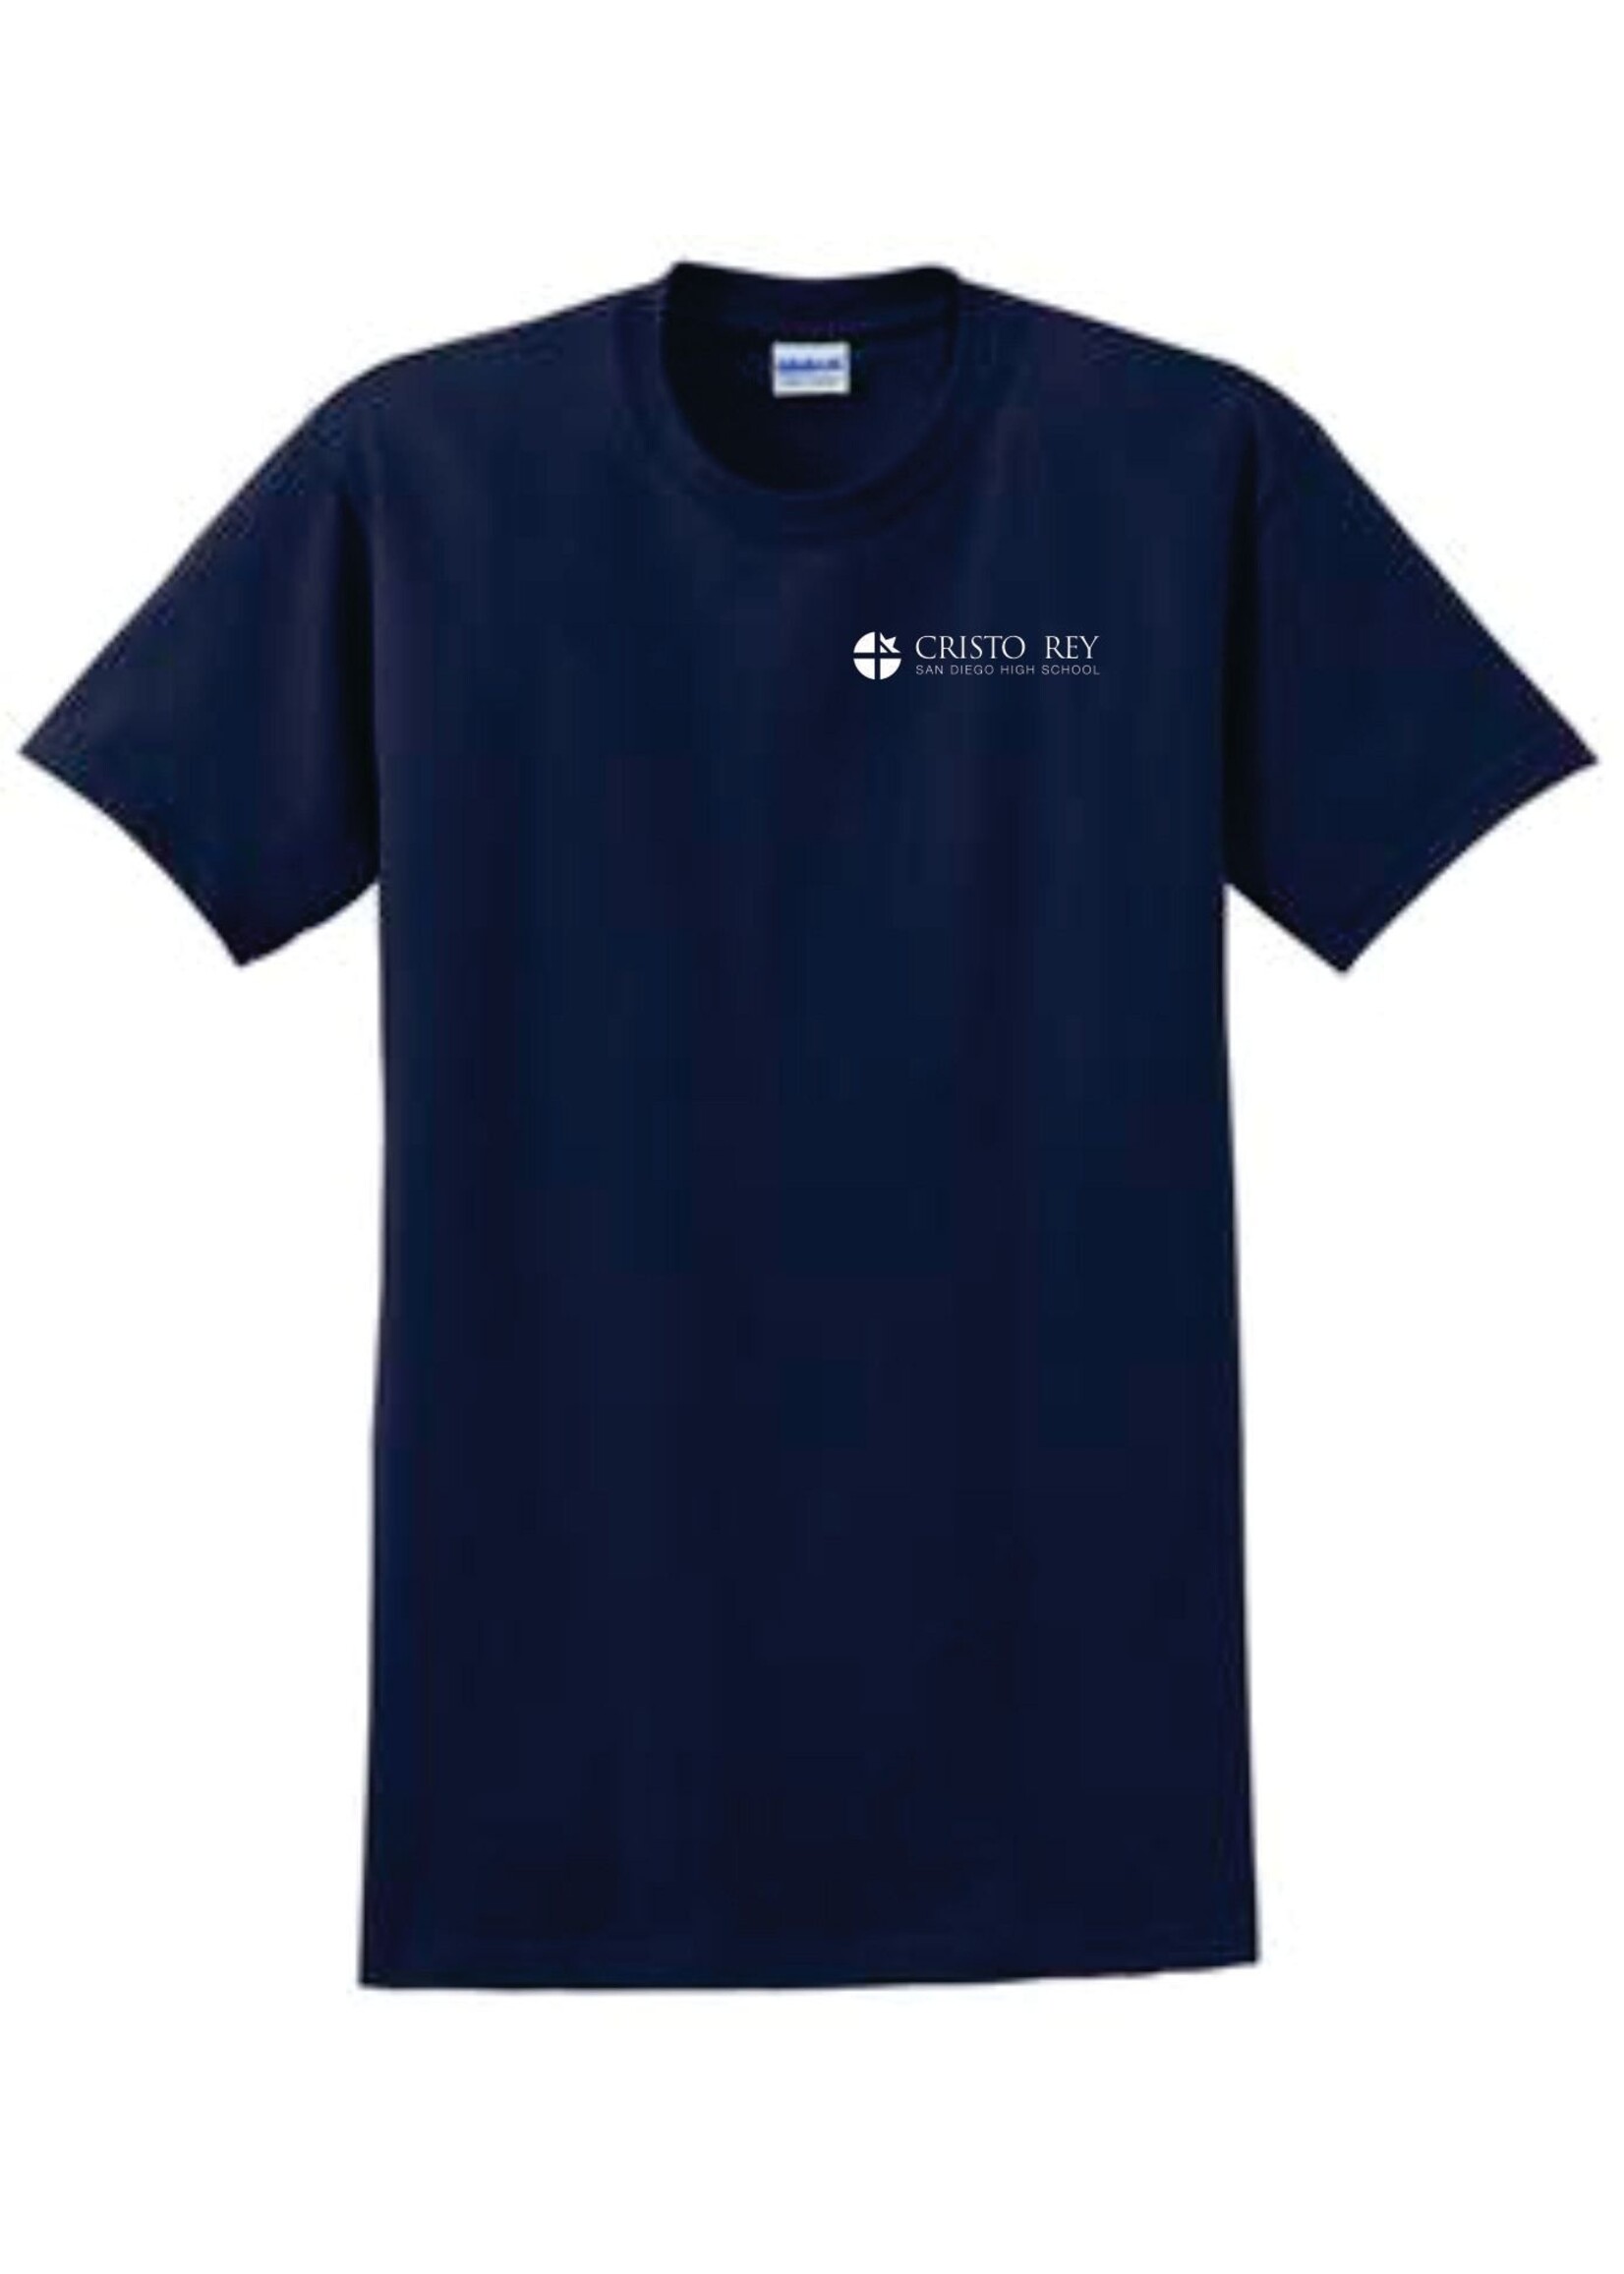 CRSD Navy Short Sleeve T-Shirt